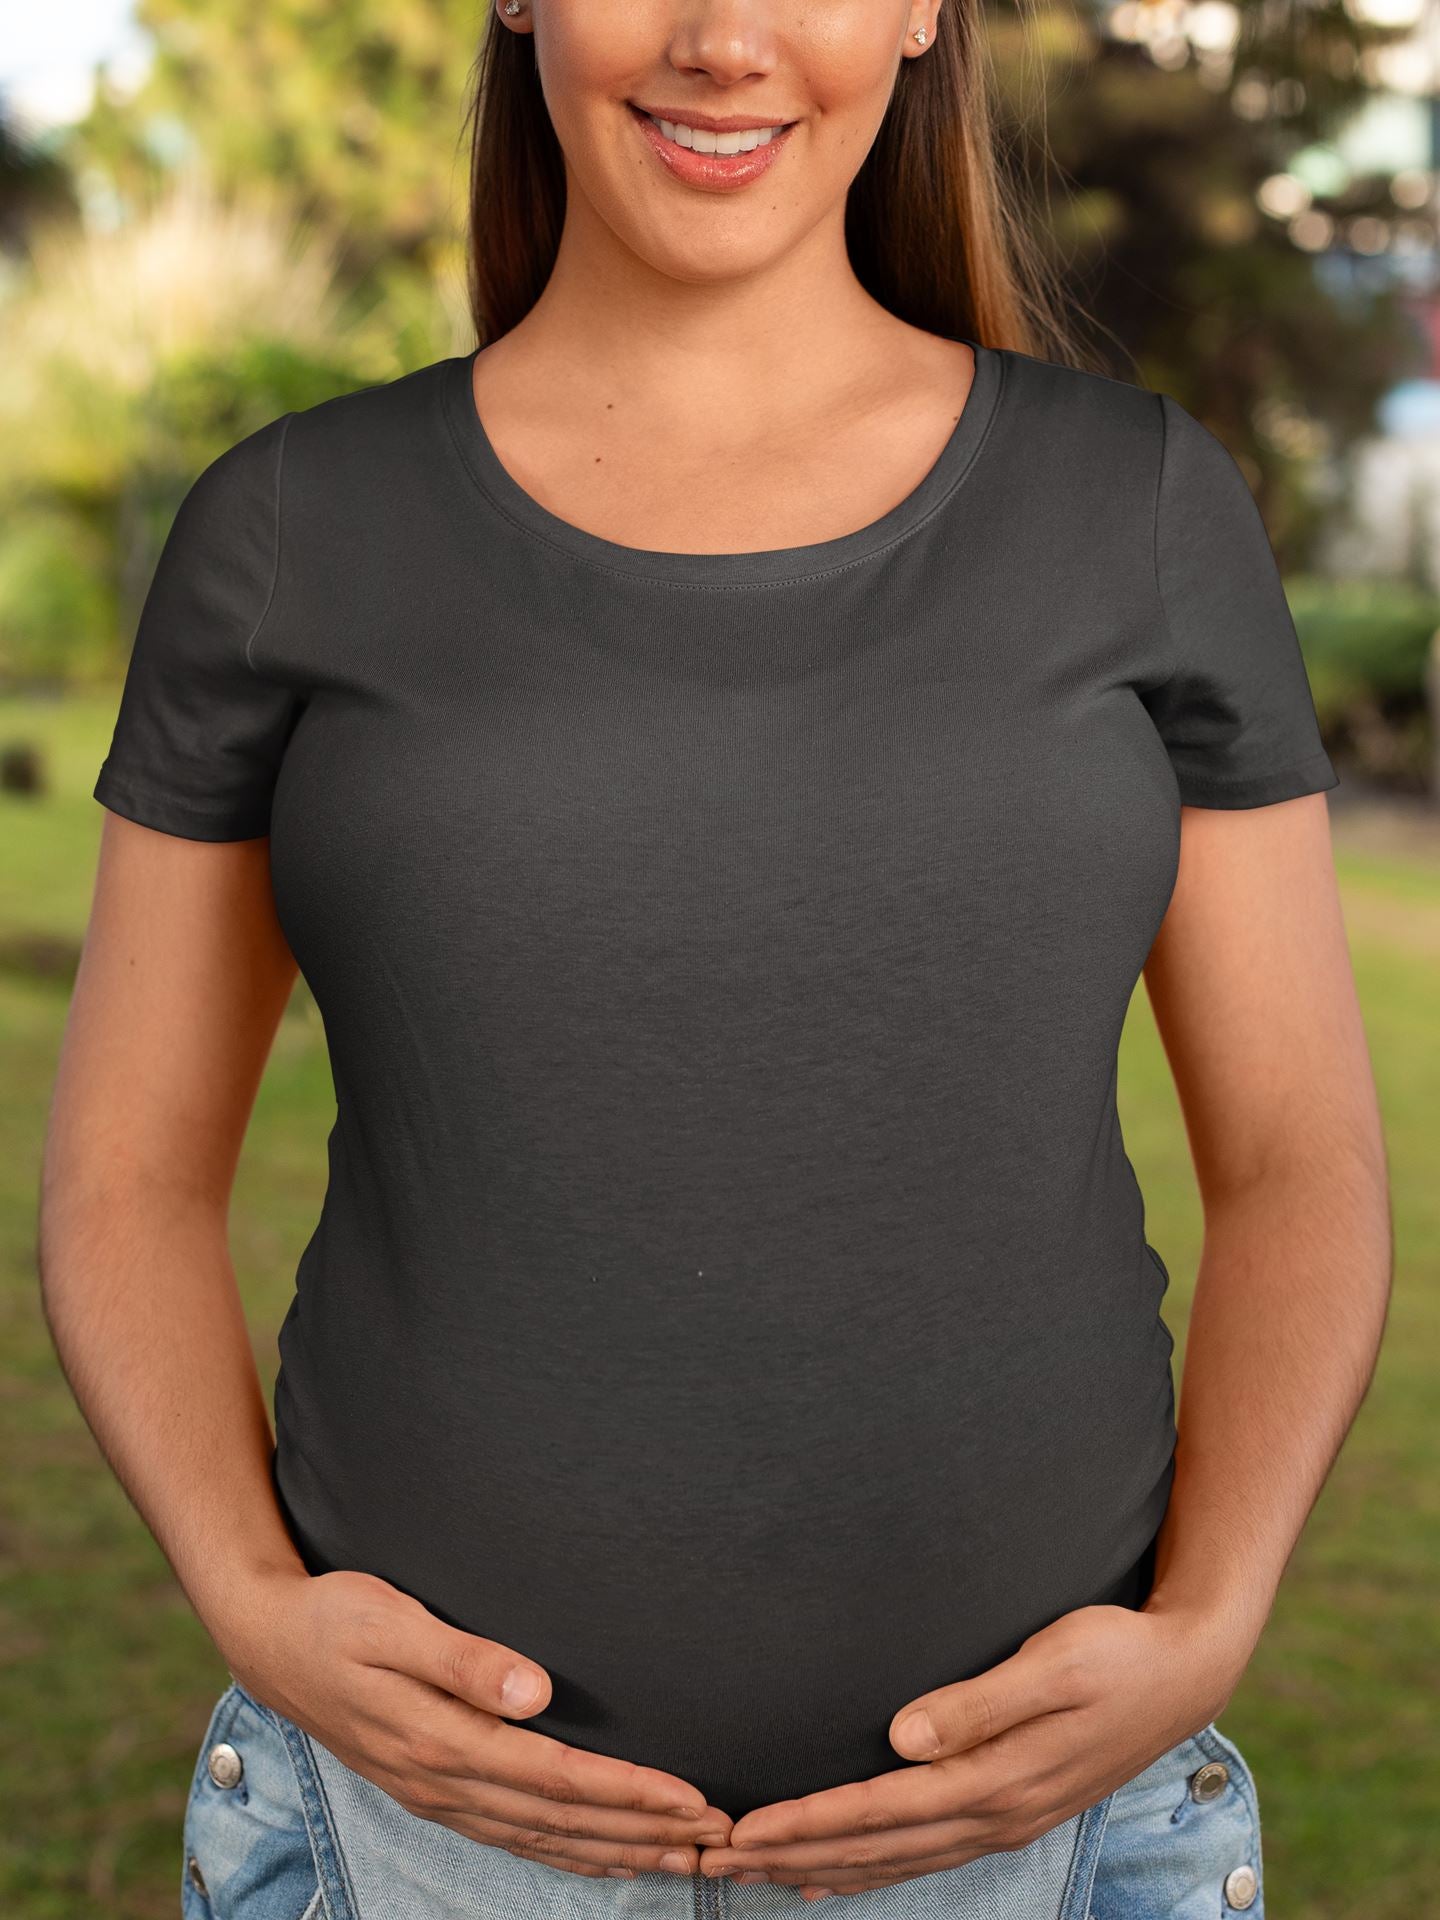 Catch My Drift India Super Comfy Multi Colour Plain T Shirt for Pregnant Women freeshipping - Catch My Drift India